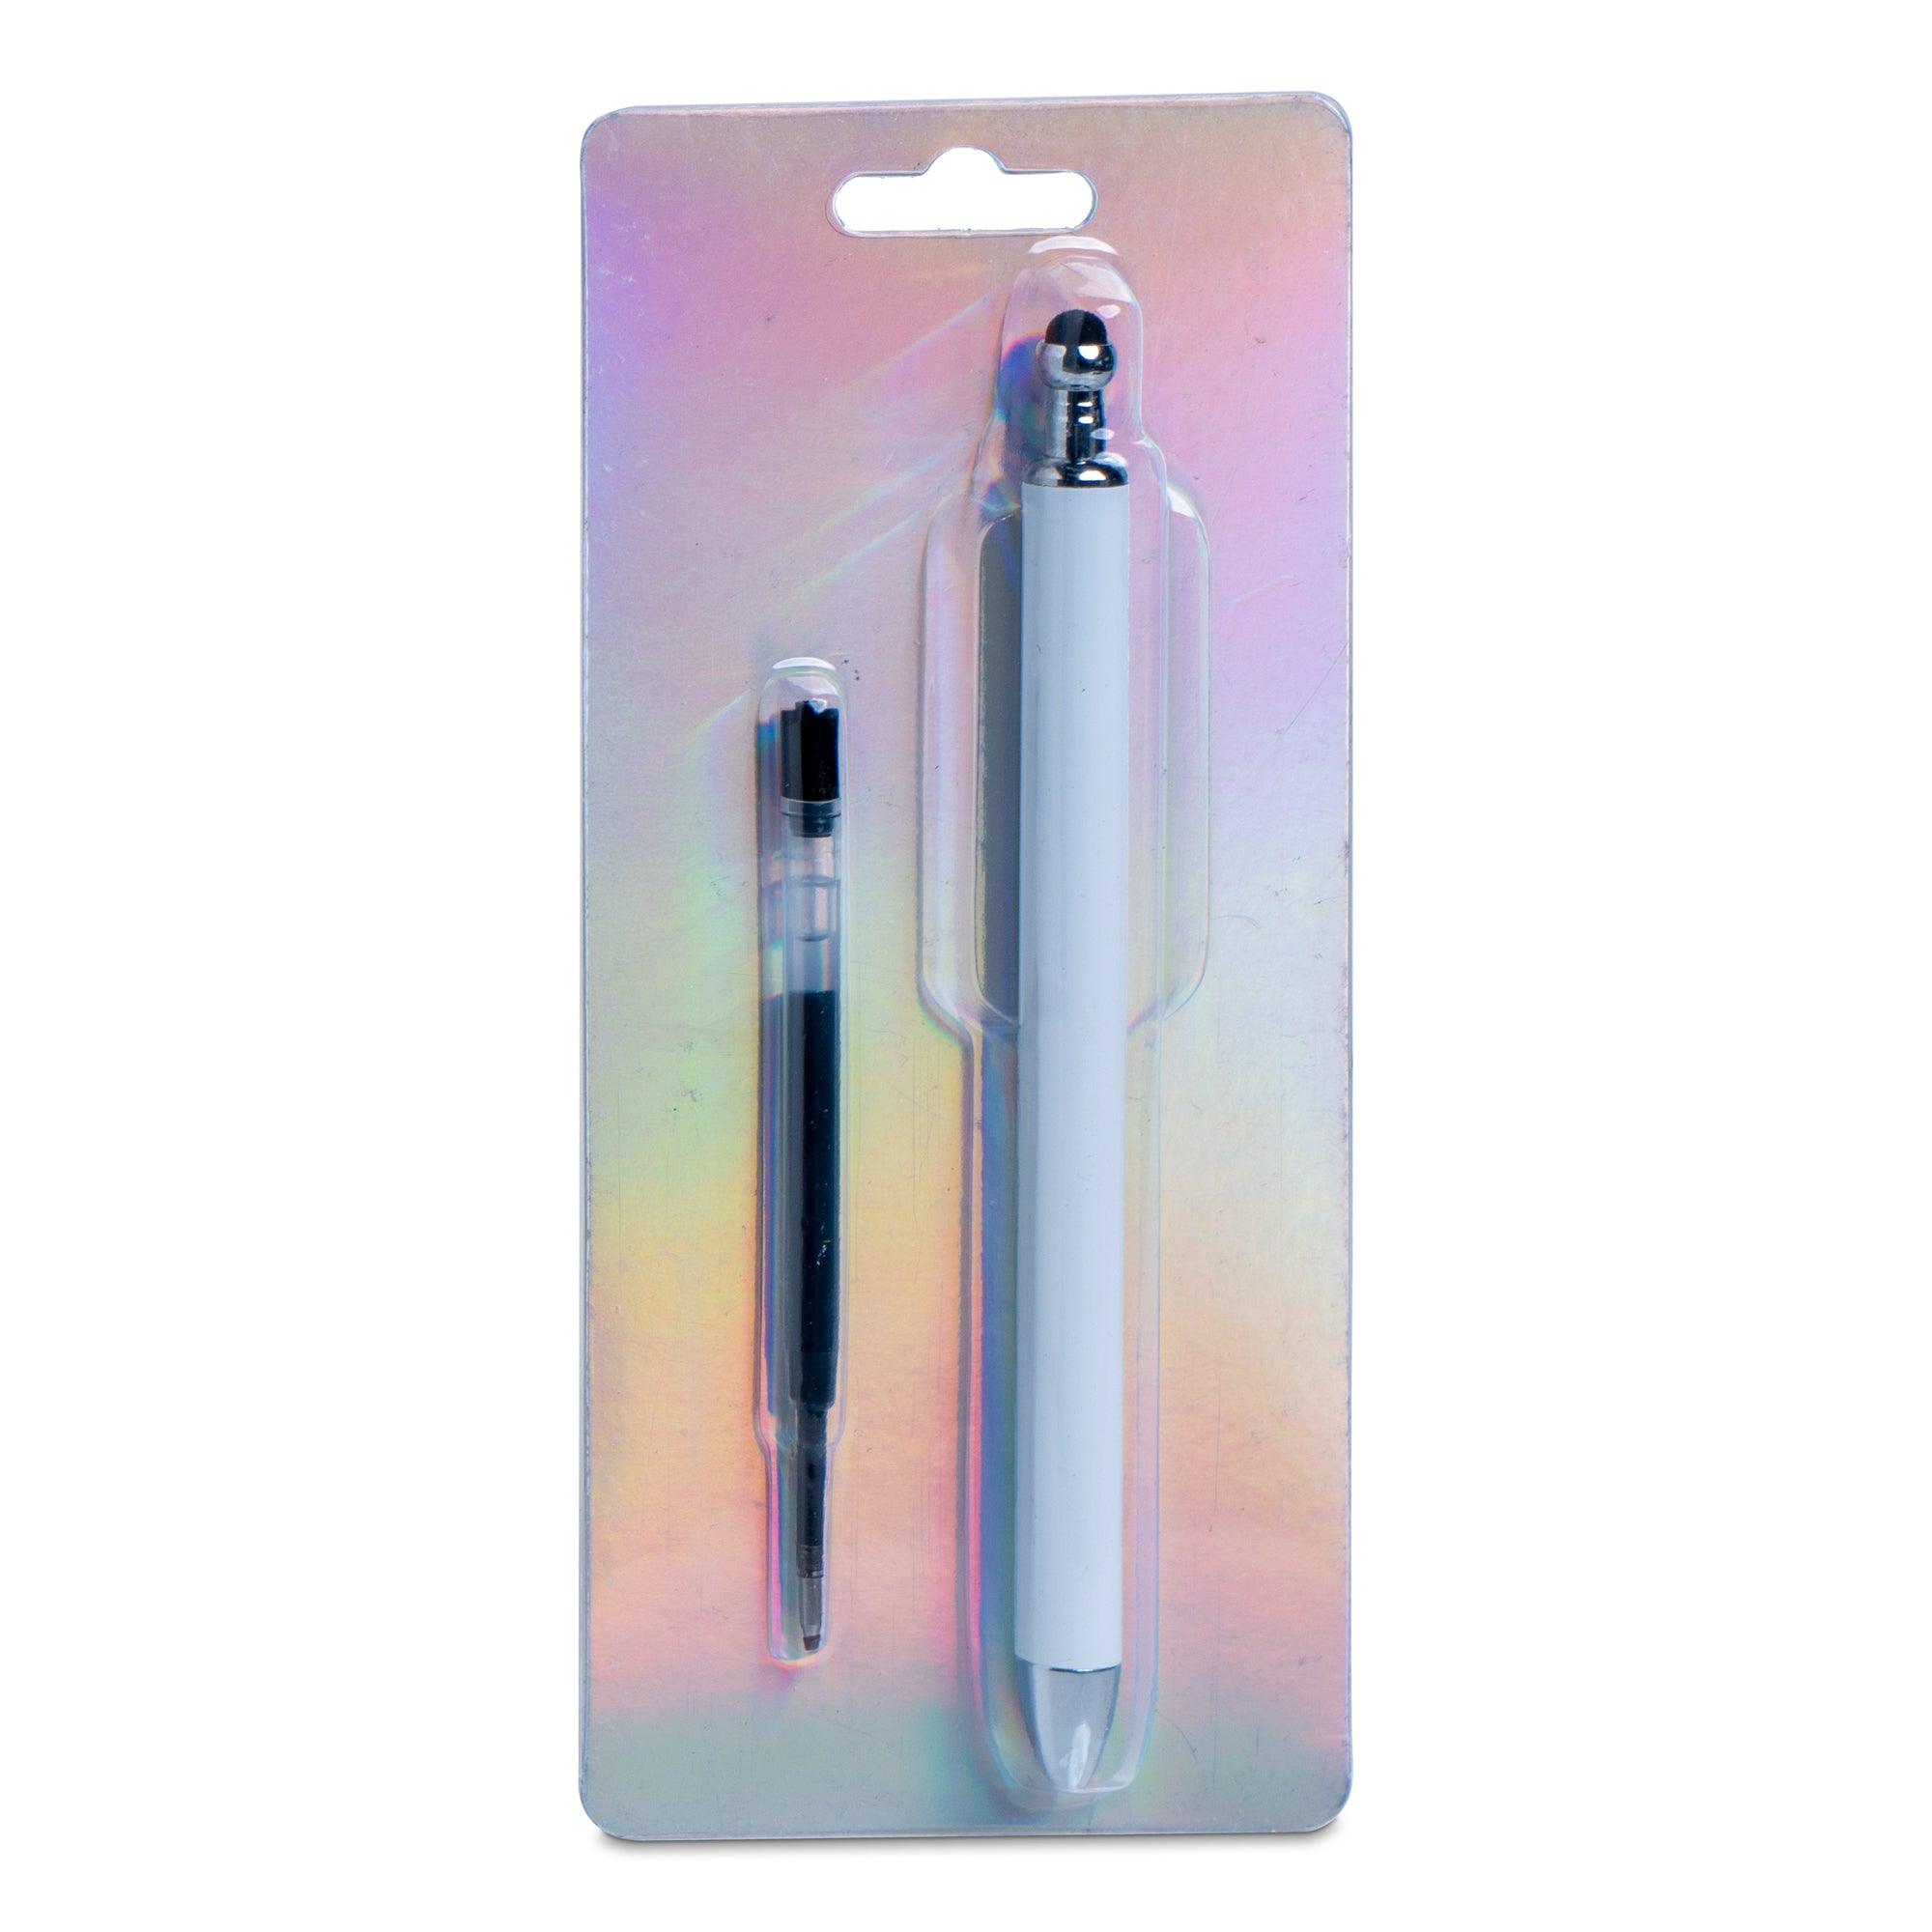 Wholesale Fast Sublimation Pens Blank Digitizer Pen For DIY